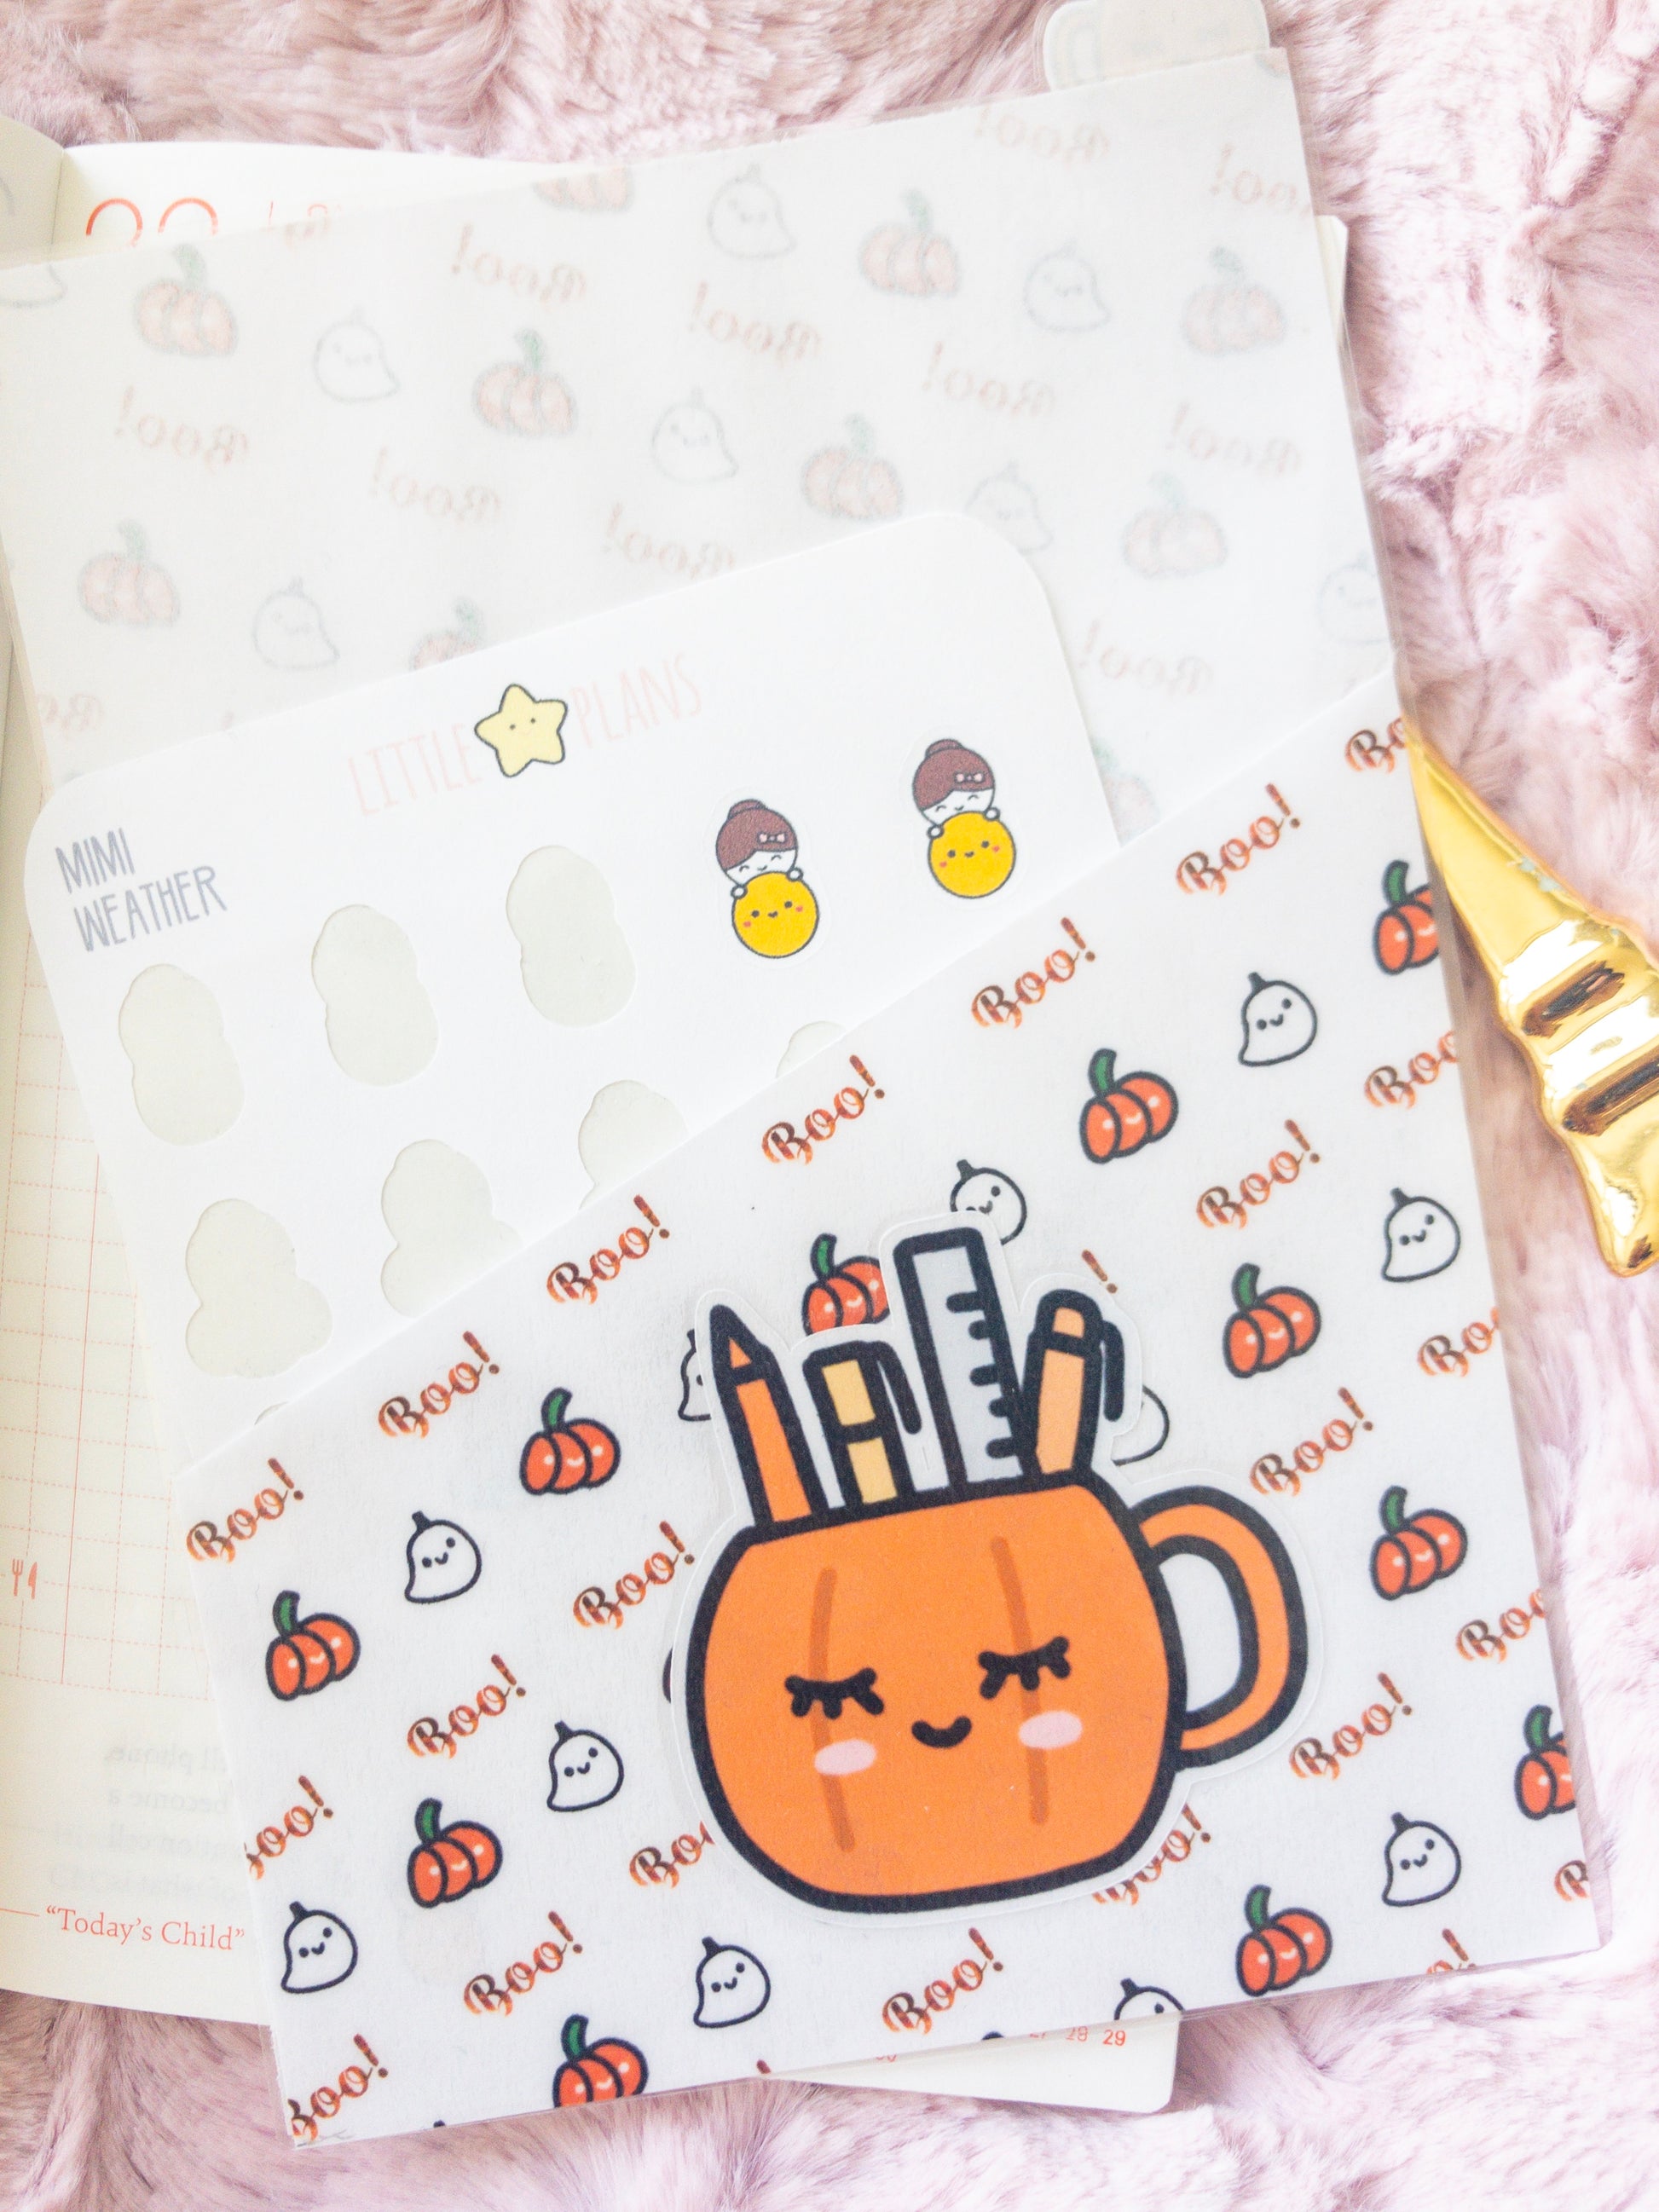 Little Boo Halloween Digital, Vellum Paper and Decorative Planner Dashboard - Littlestarplans